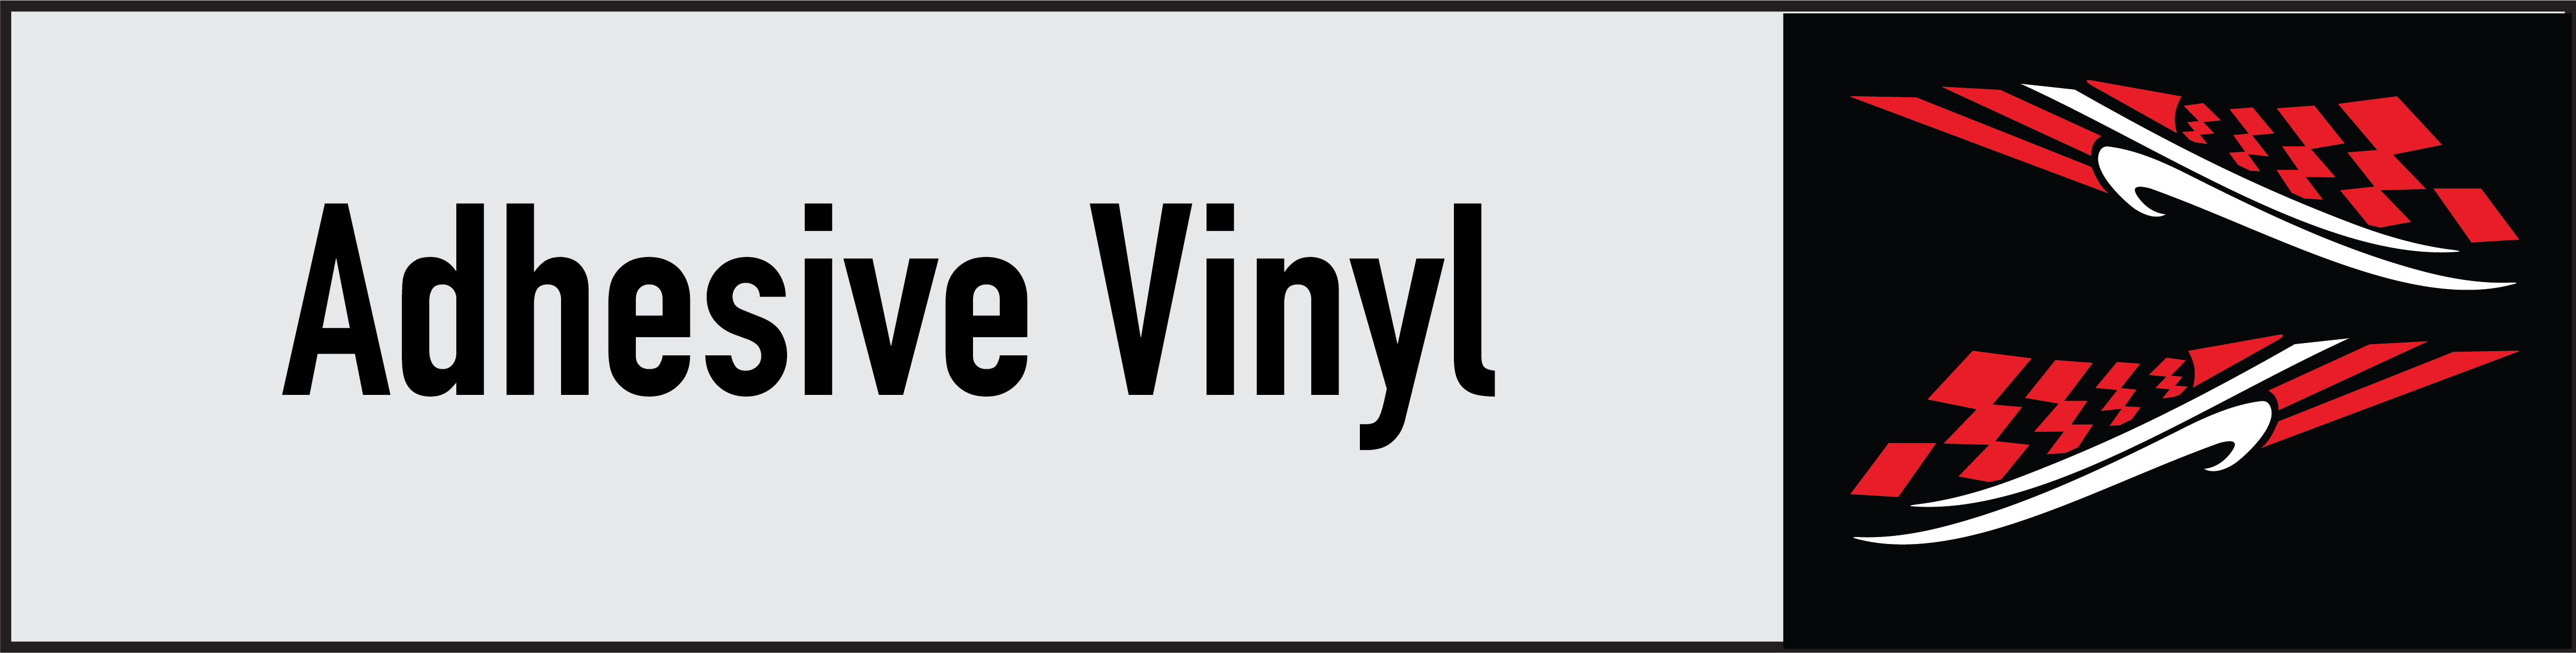 adhesive vinyl